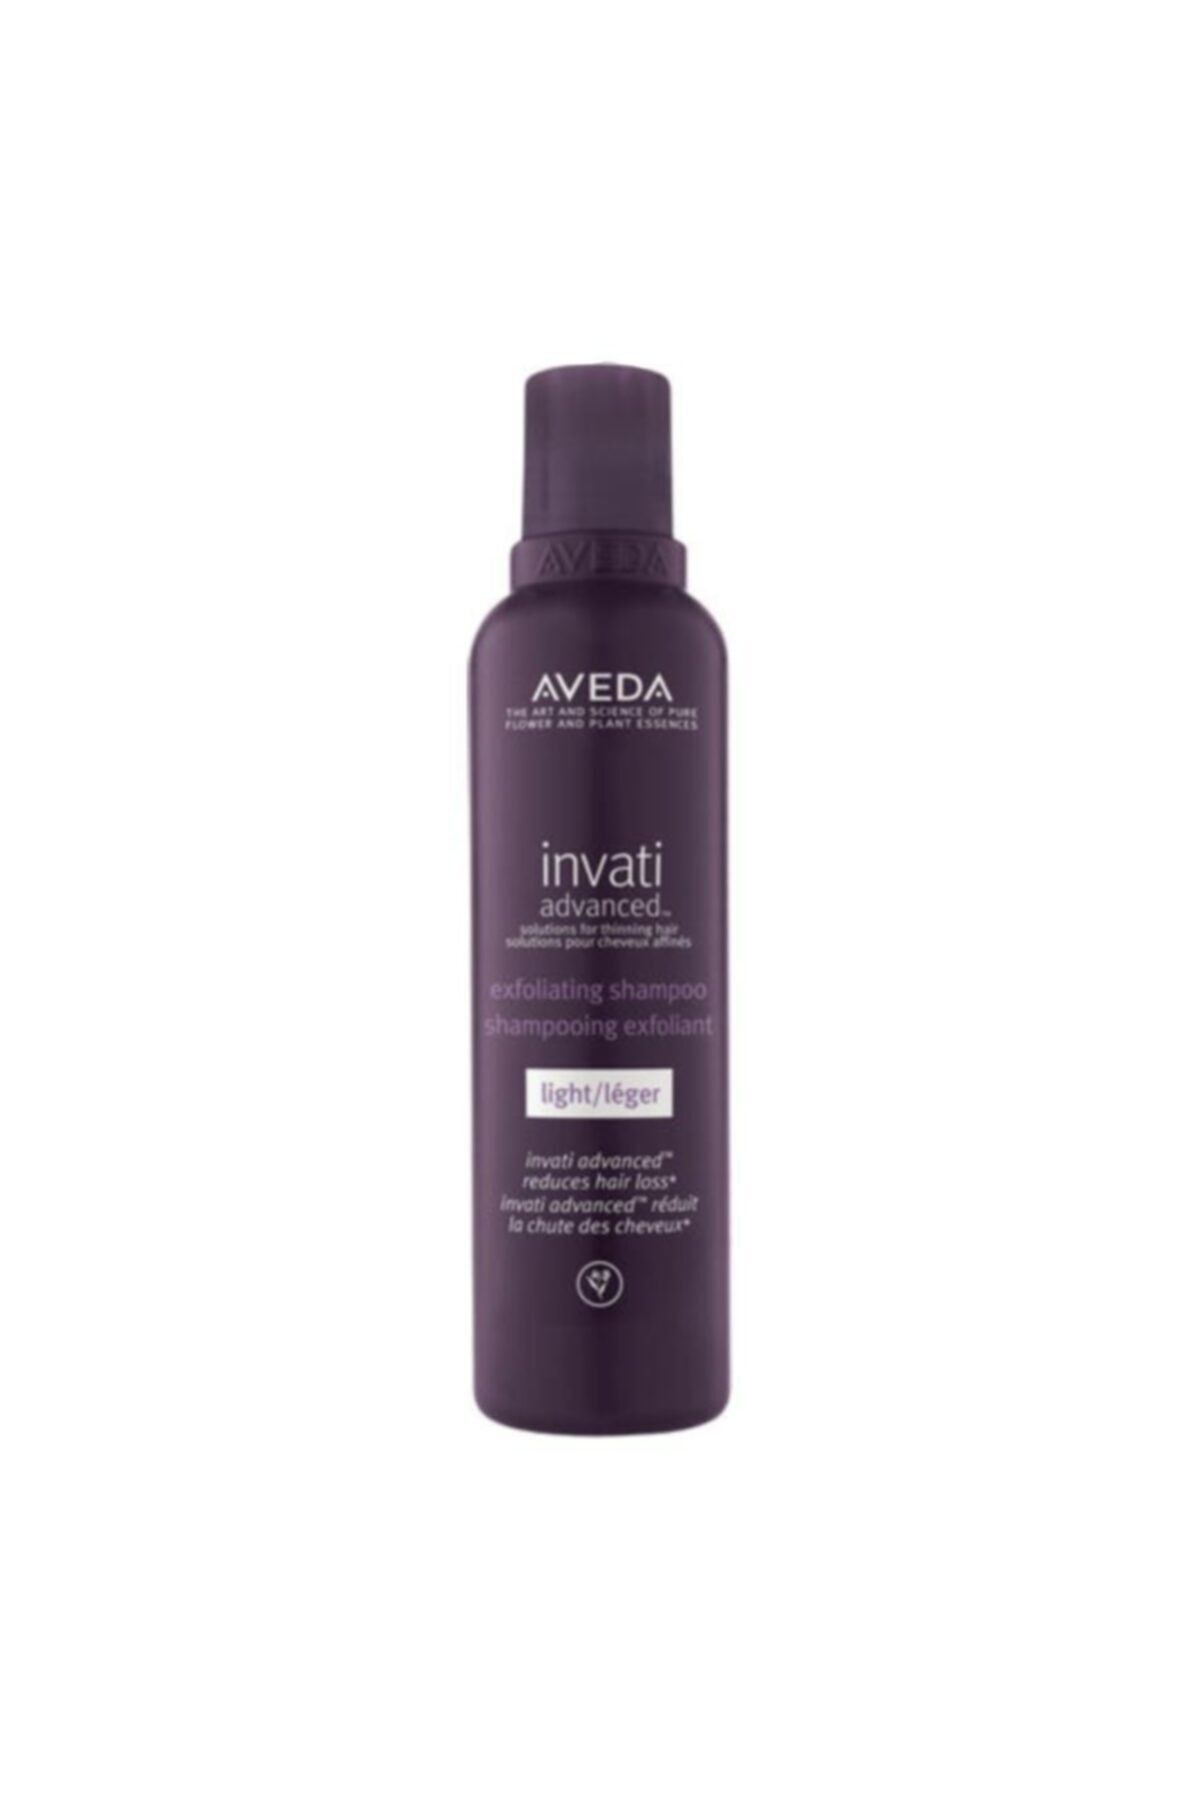 Aveda Invati Advanced Exfoliating For Thin And Weak Hair Anti Hair Loss Şampuan Light 200 ml